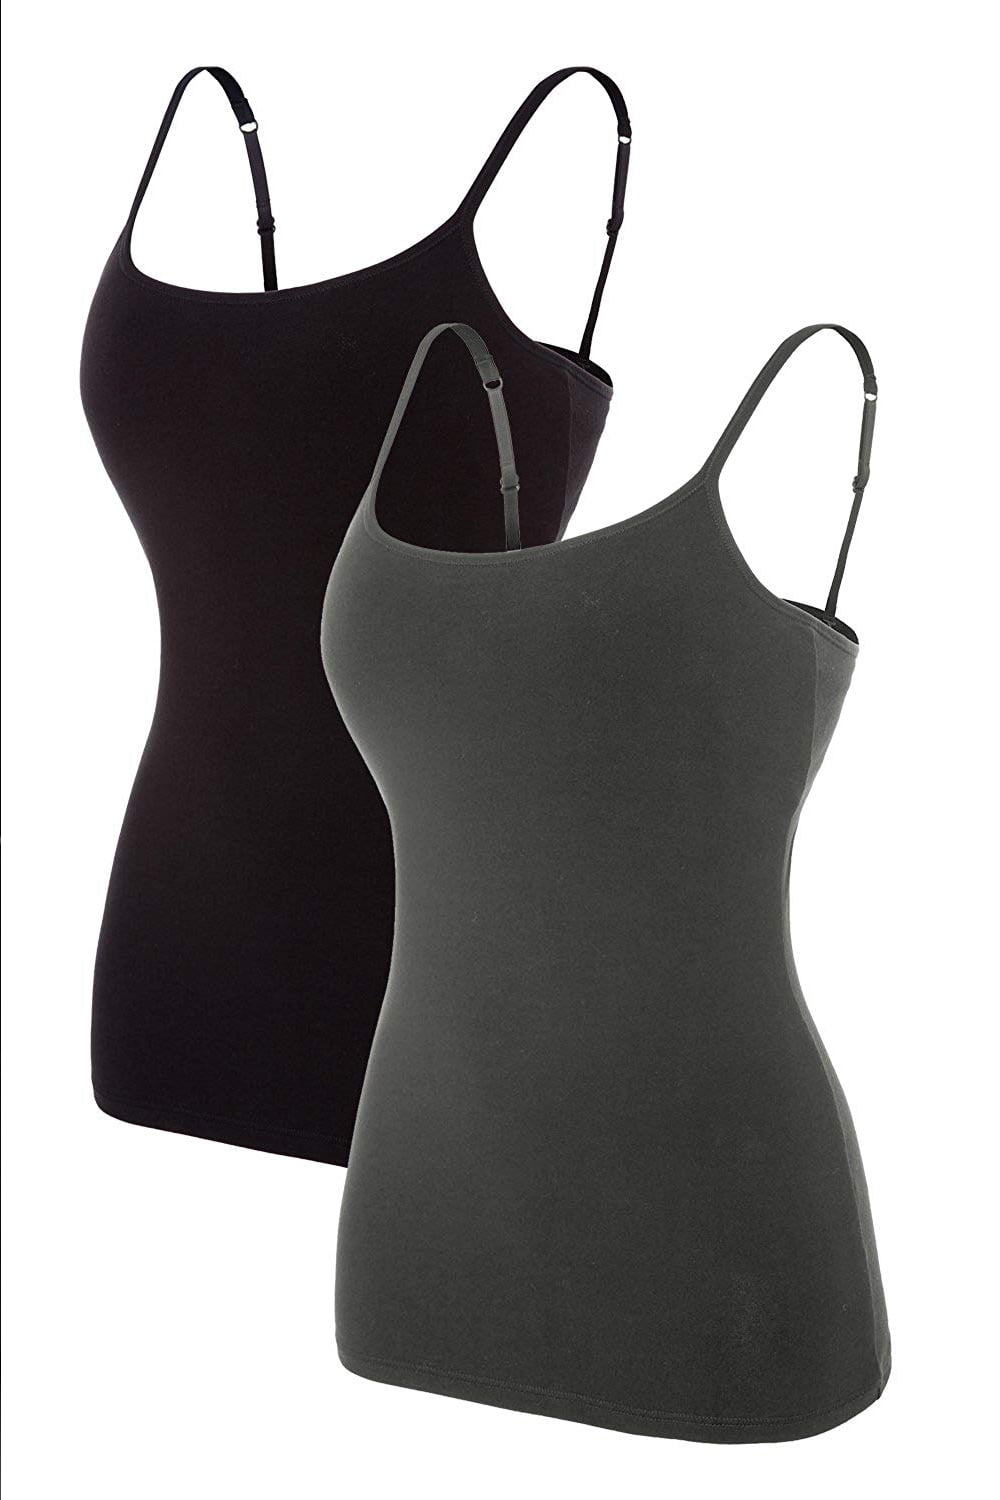 Beautyin Women Cotton Camisole Shelf Bra Solid Basic Tank Top Pack